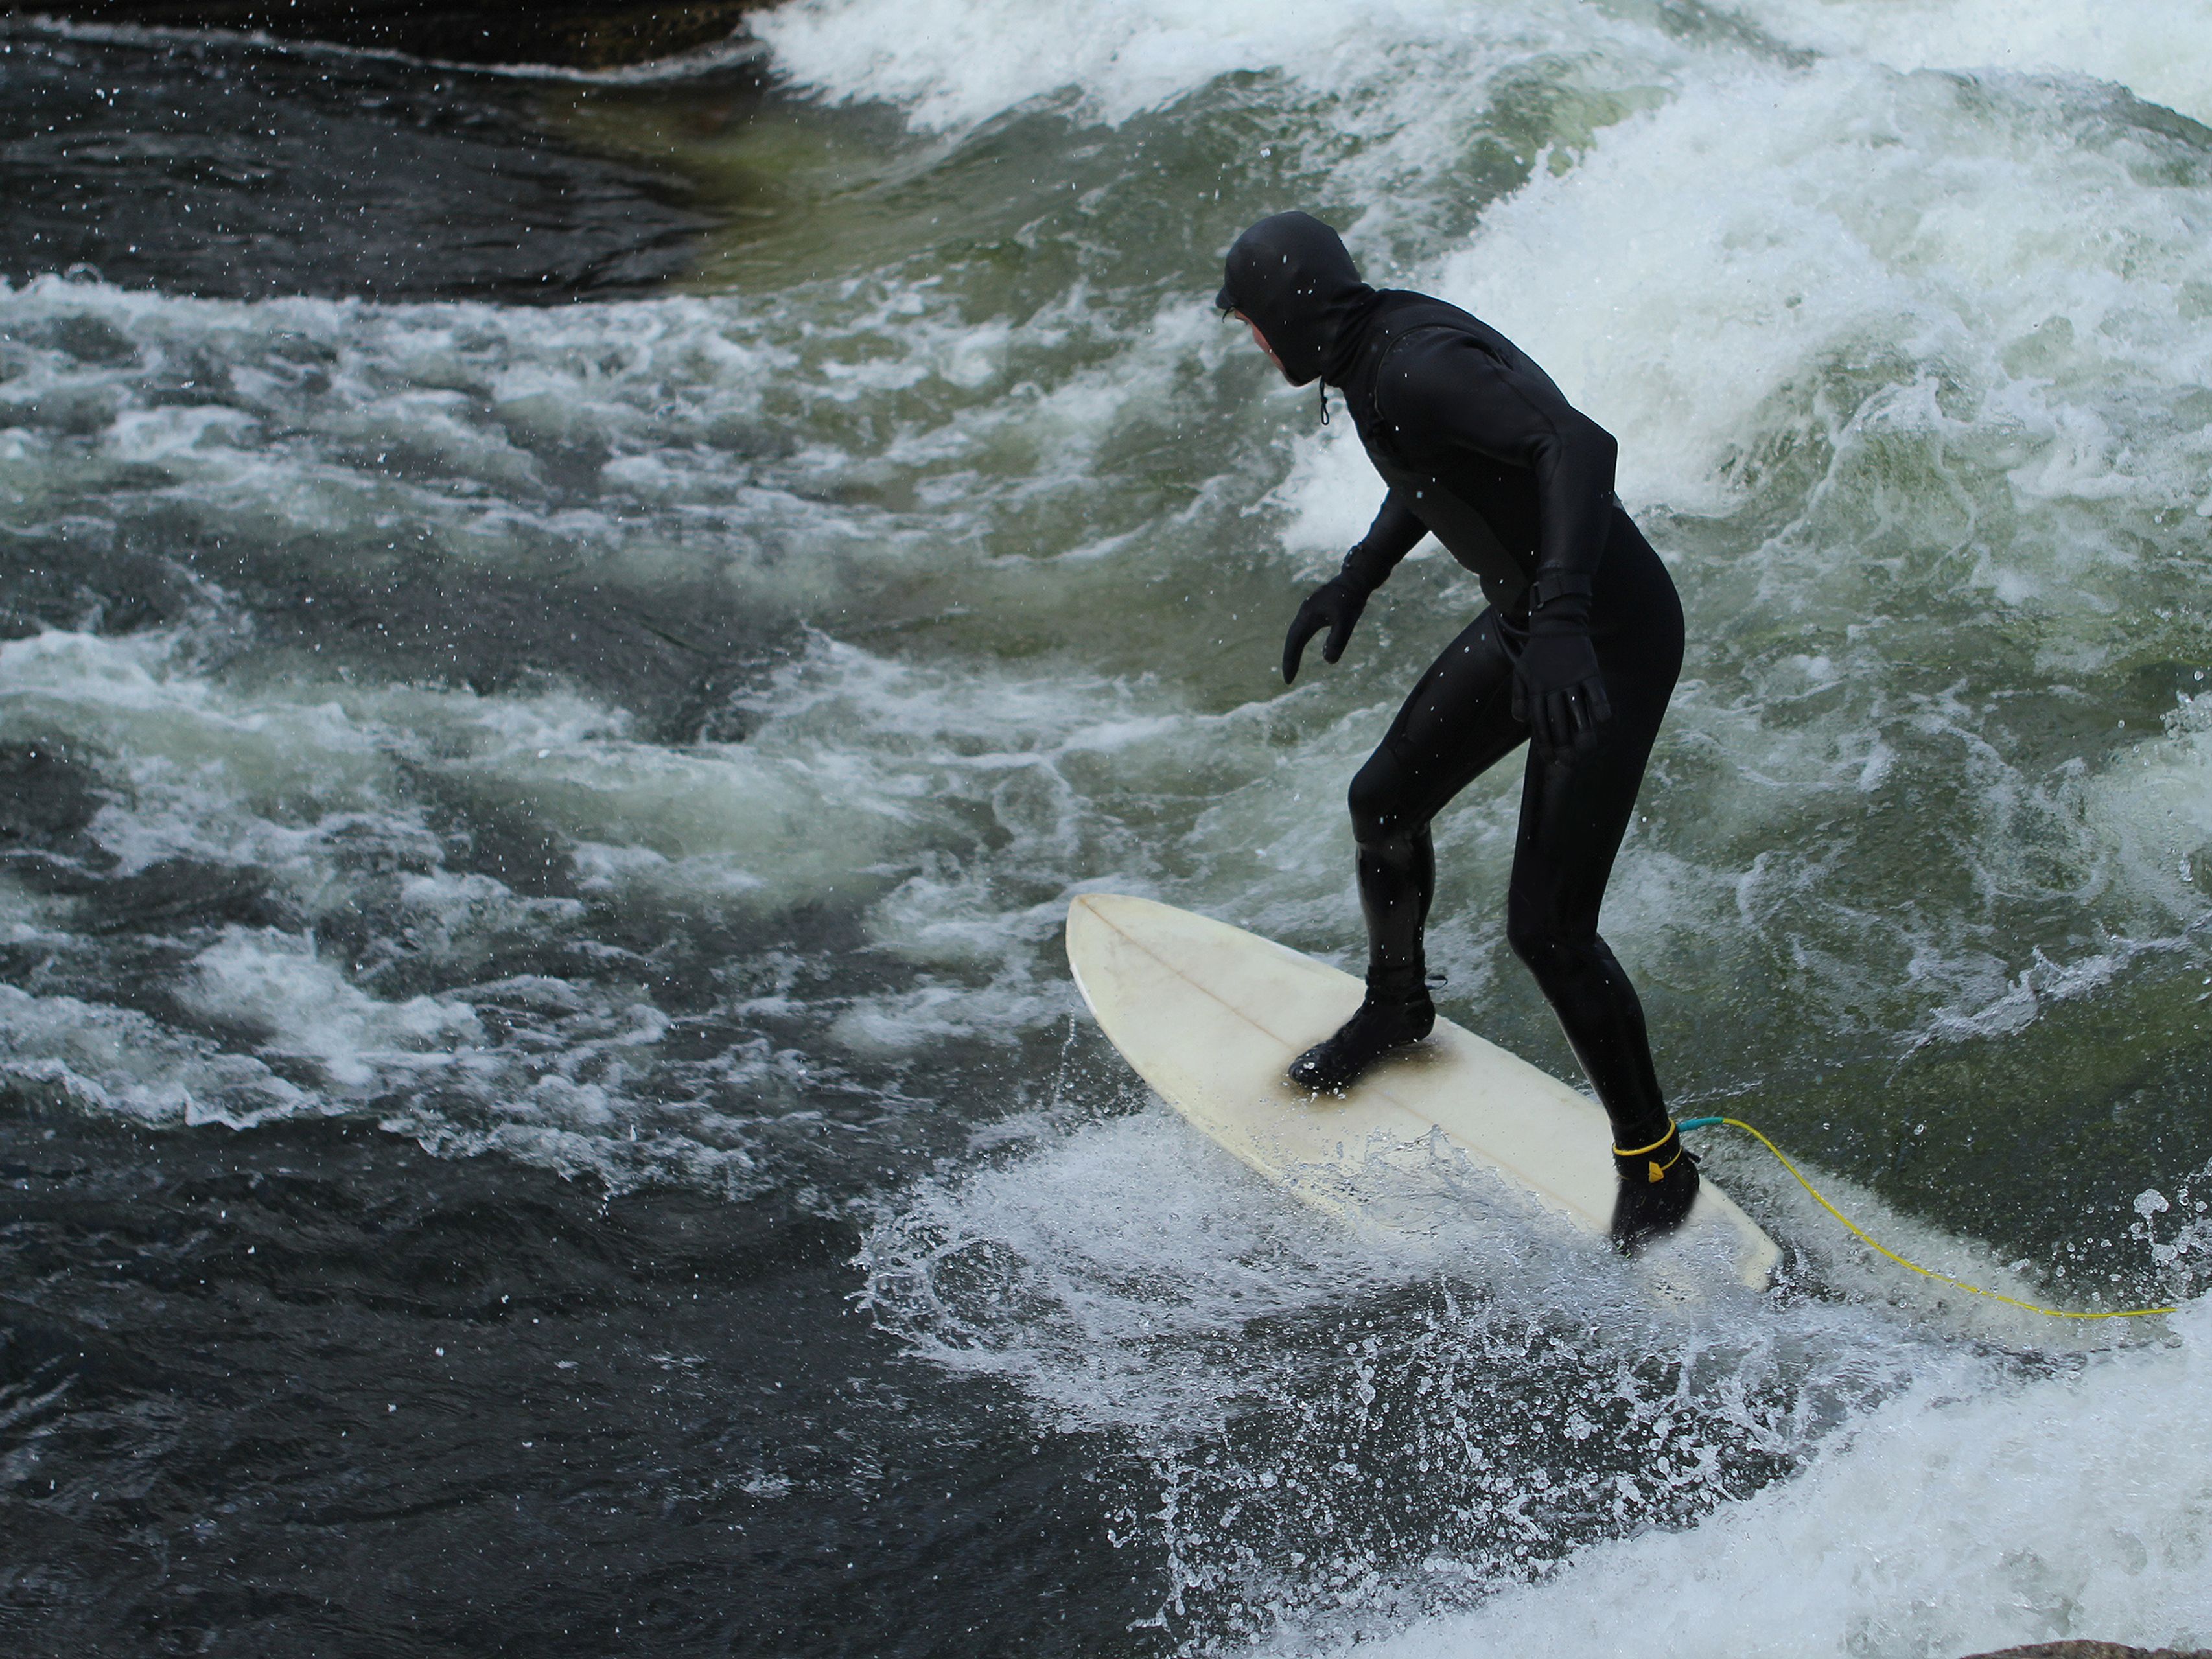 Man in black wetsuit is surfing in waves